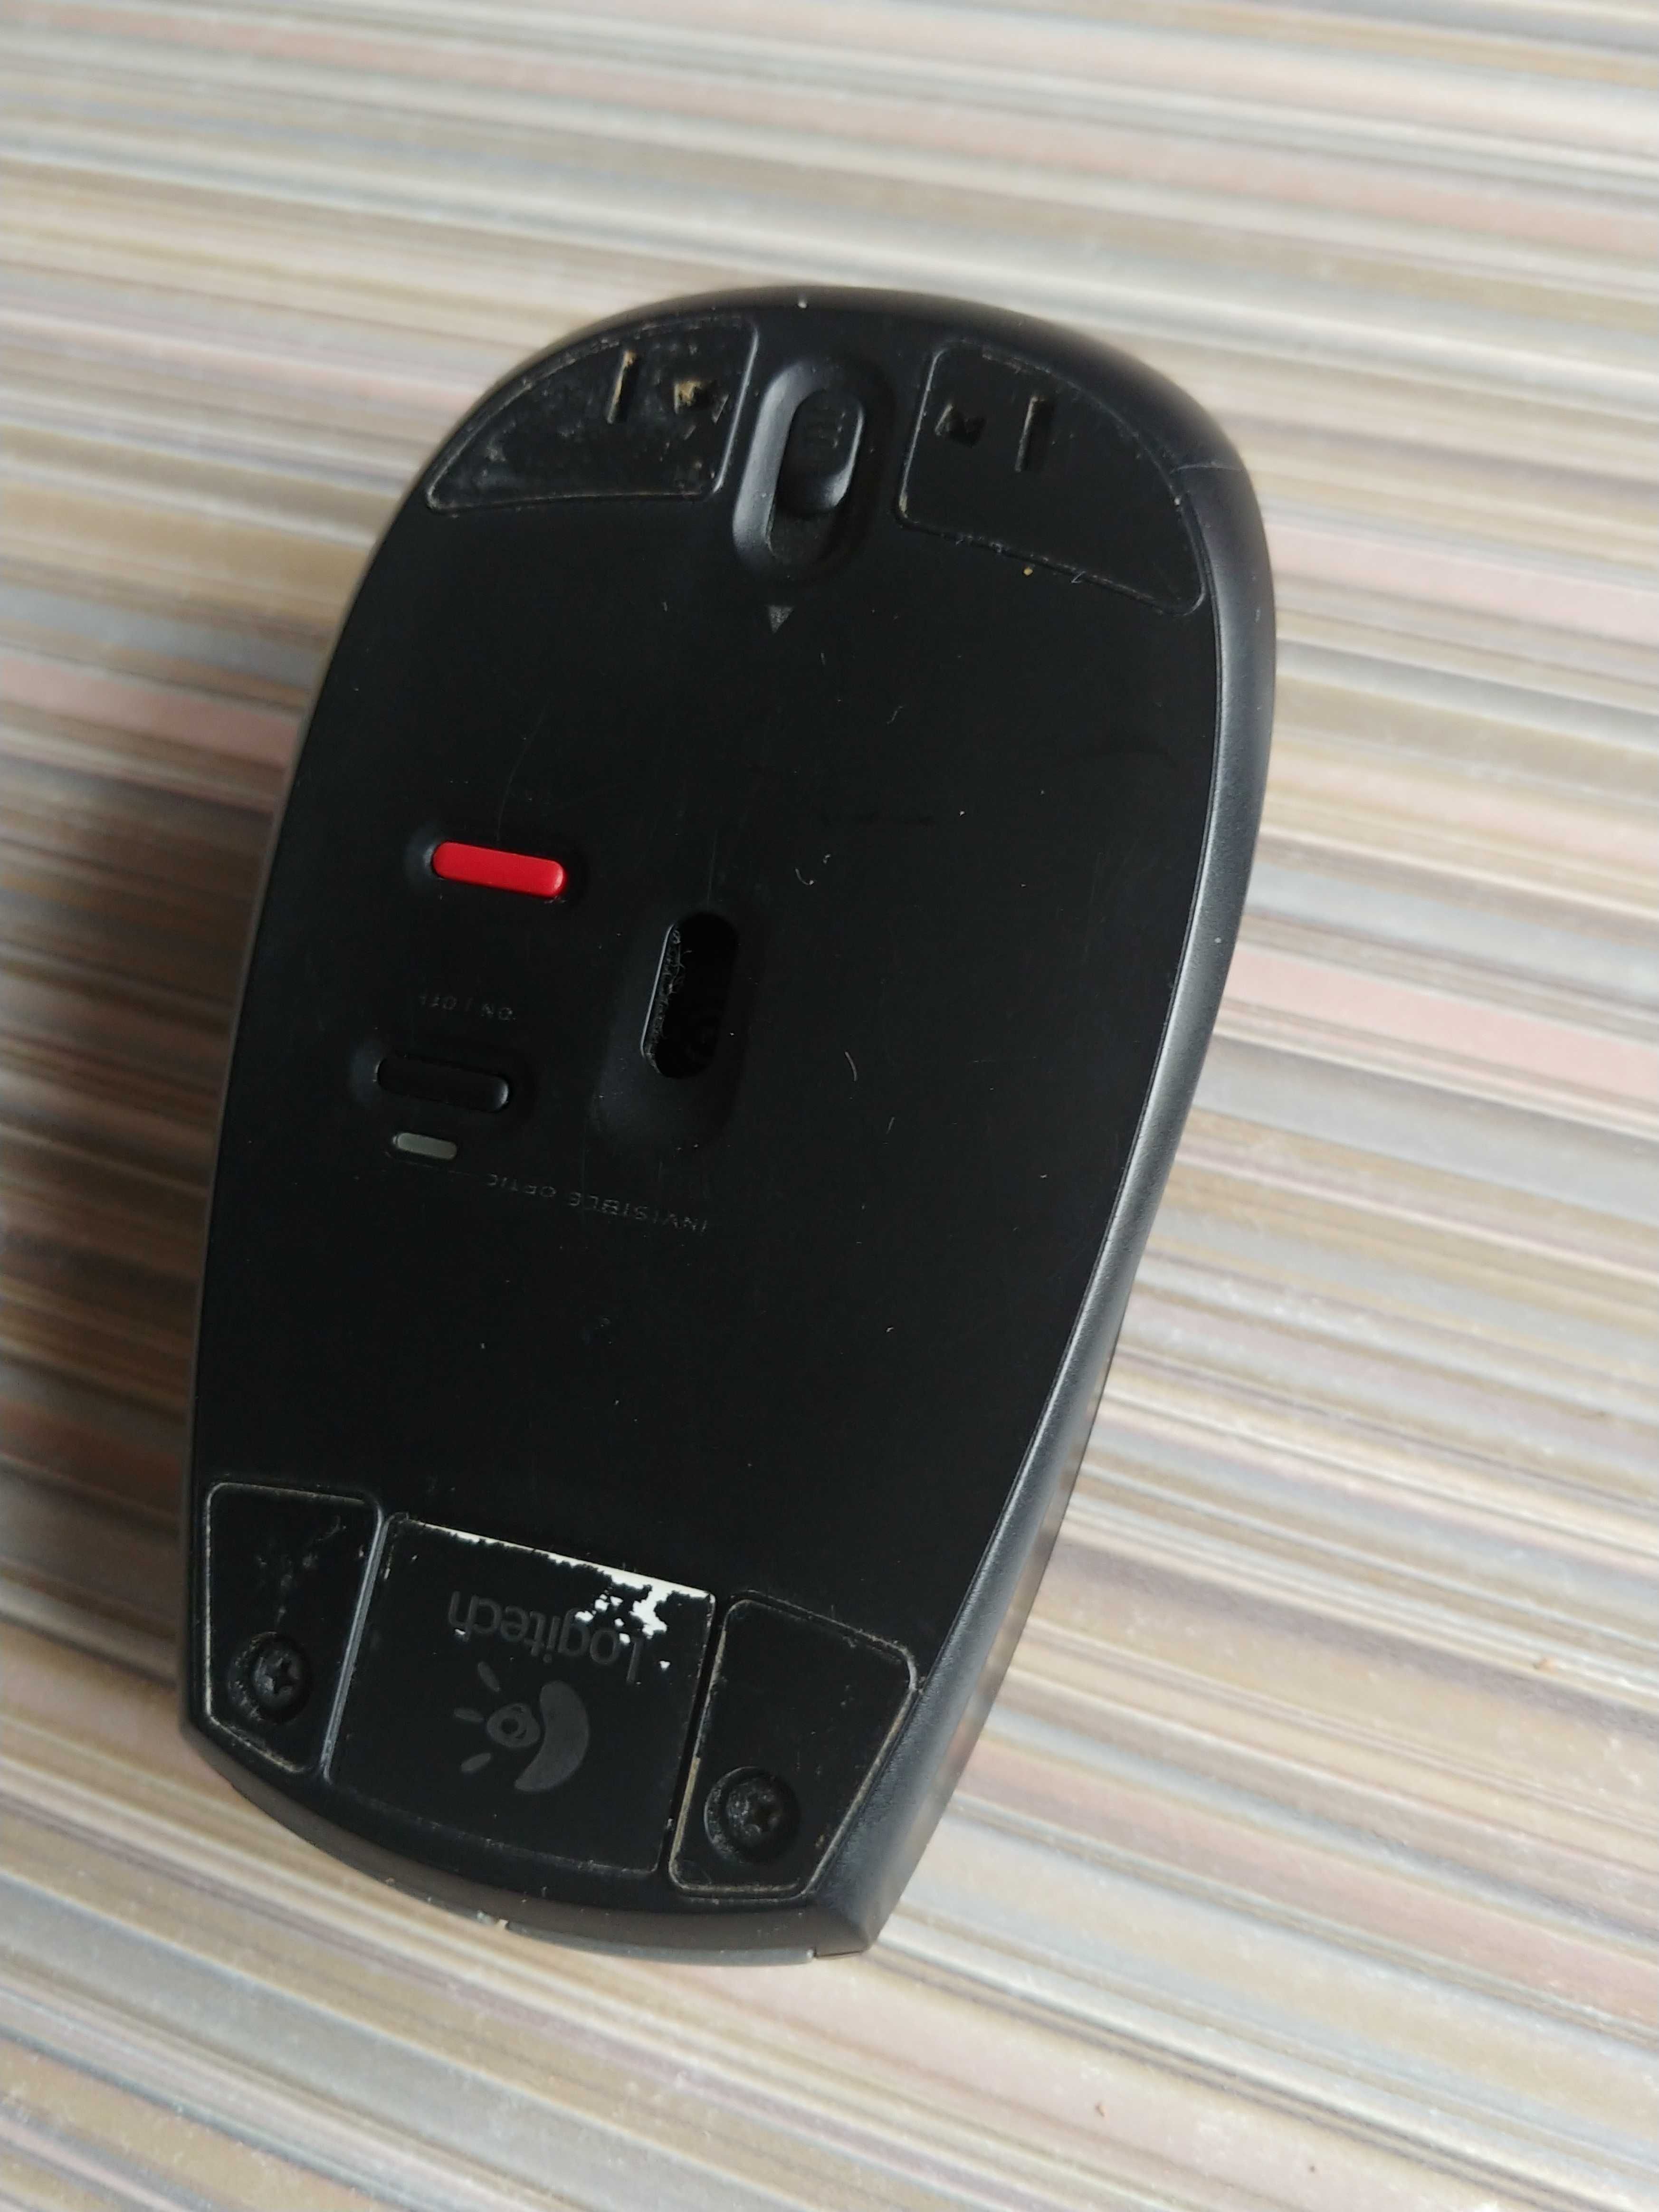 Клавиатура, мышь, пульт Logitech S510 Cordless Desktop Media Remote